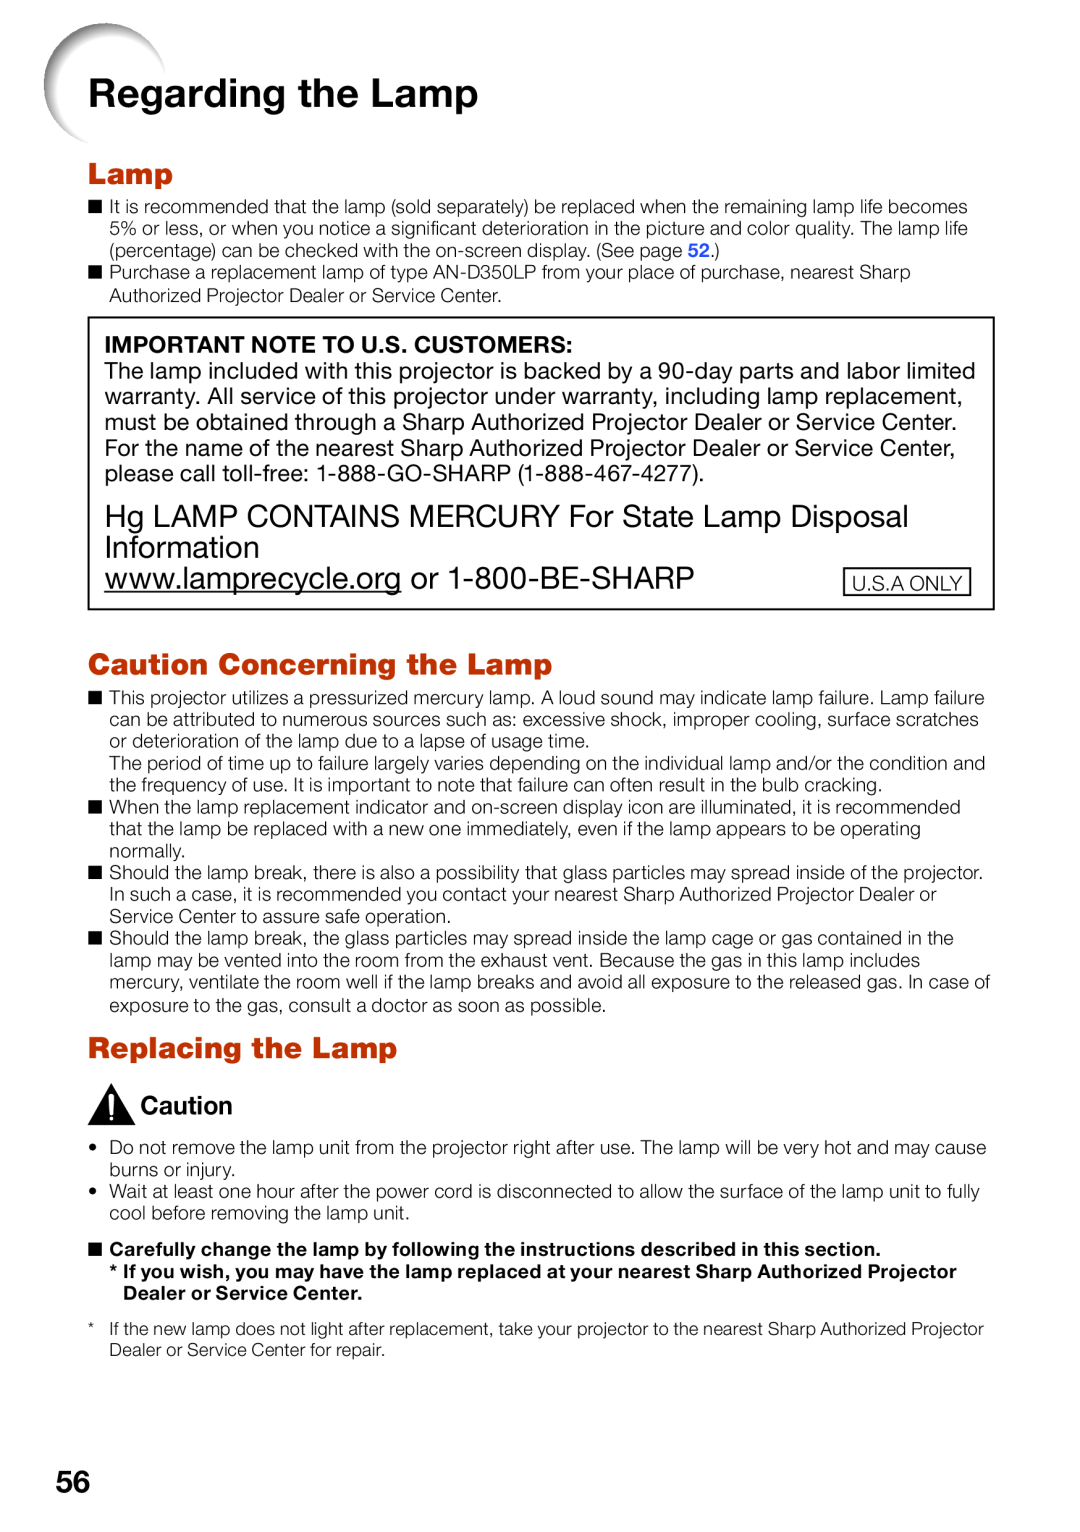 Sharp XR-55X, XR-50S Regarding the Lamp, Caution Concerning the Lamp, Replacing the Lamp, Important Note To U.S. Customers 